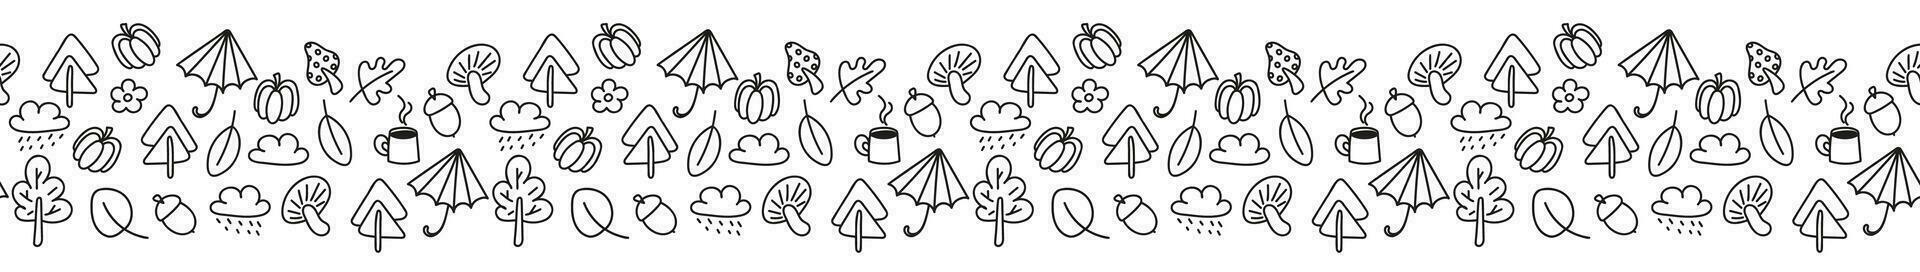 Childish autumn doodle seamless border vector illustration